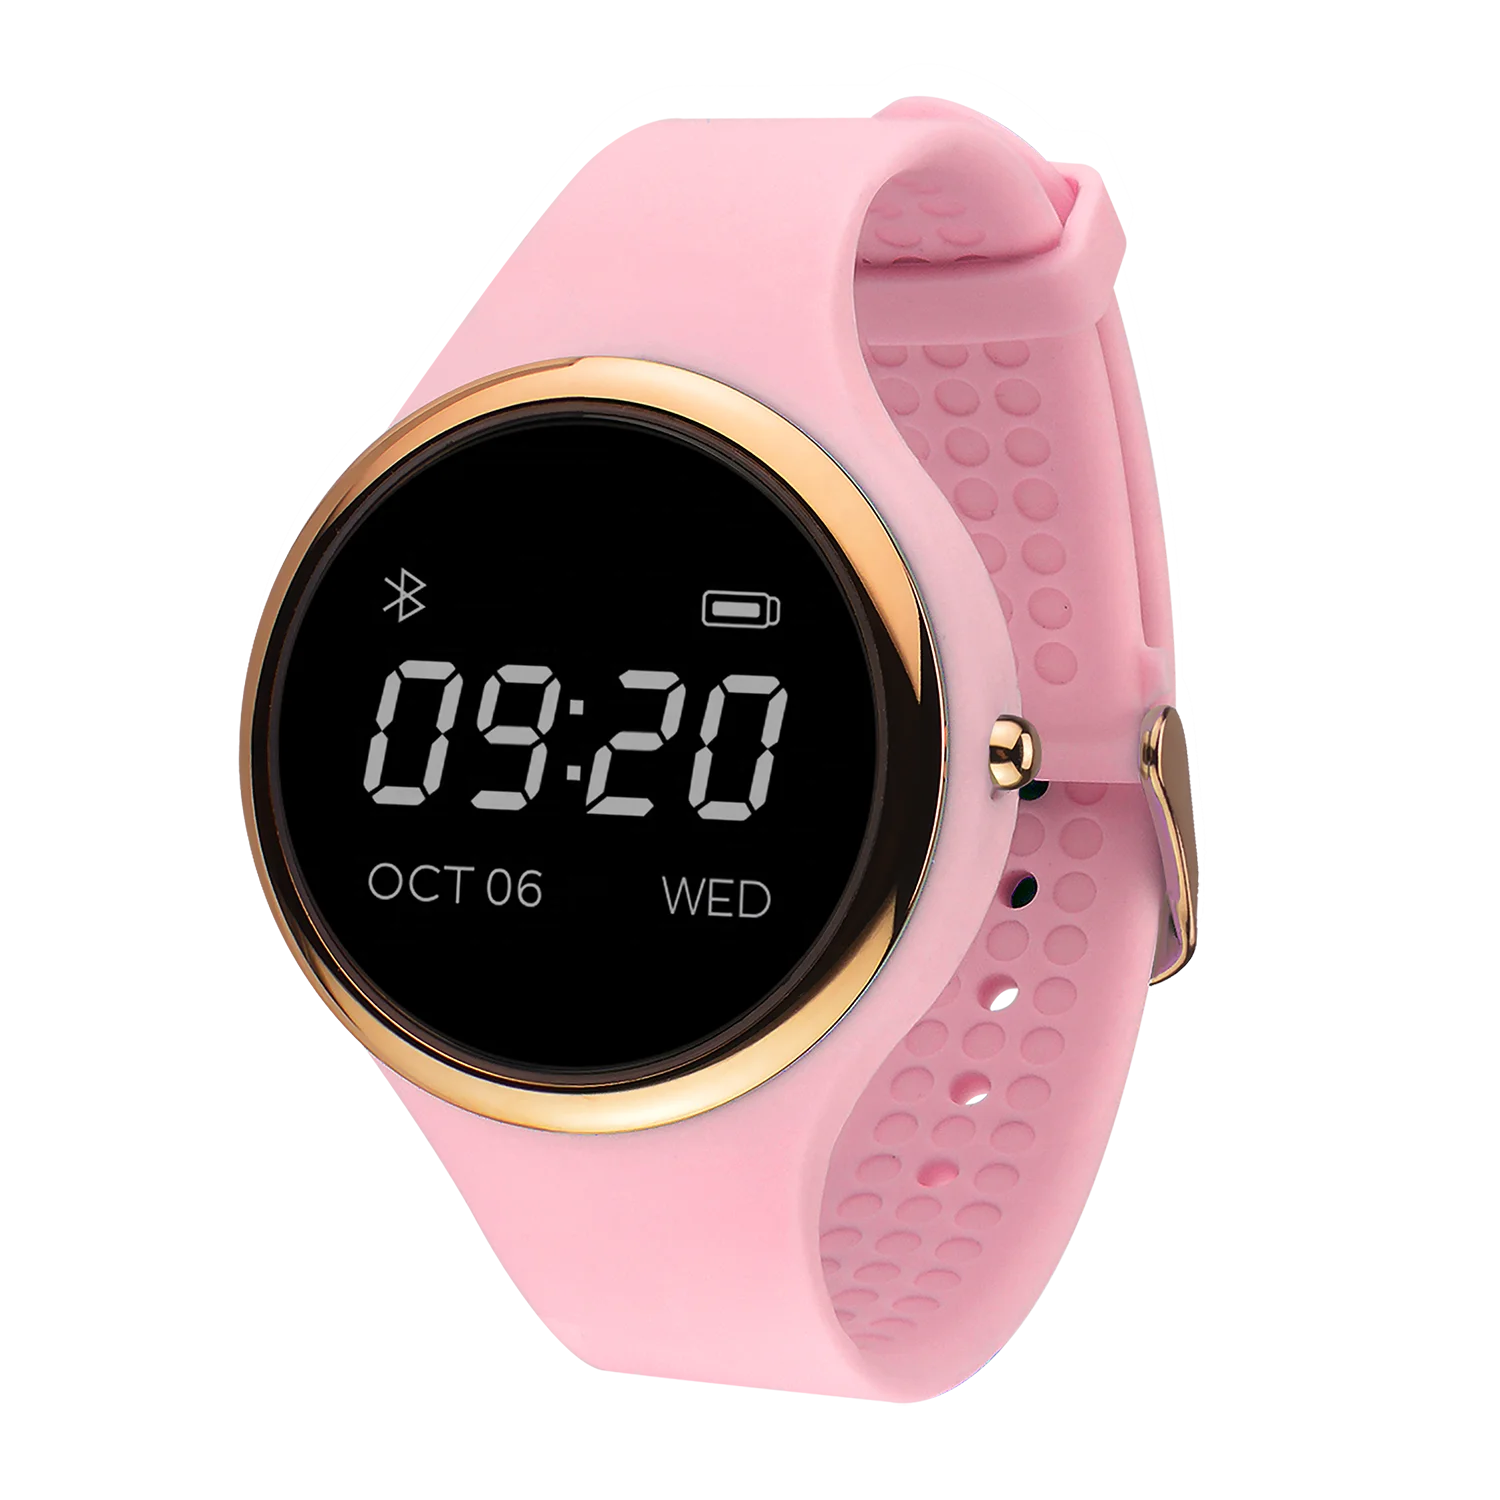 Bluetooth smart watch fitness tracker heart rate monitor Sleep monitor